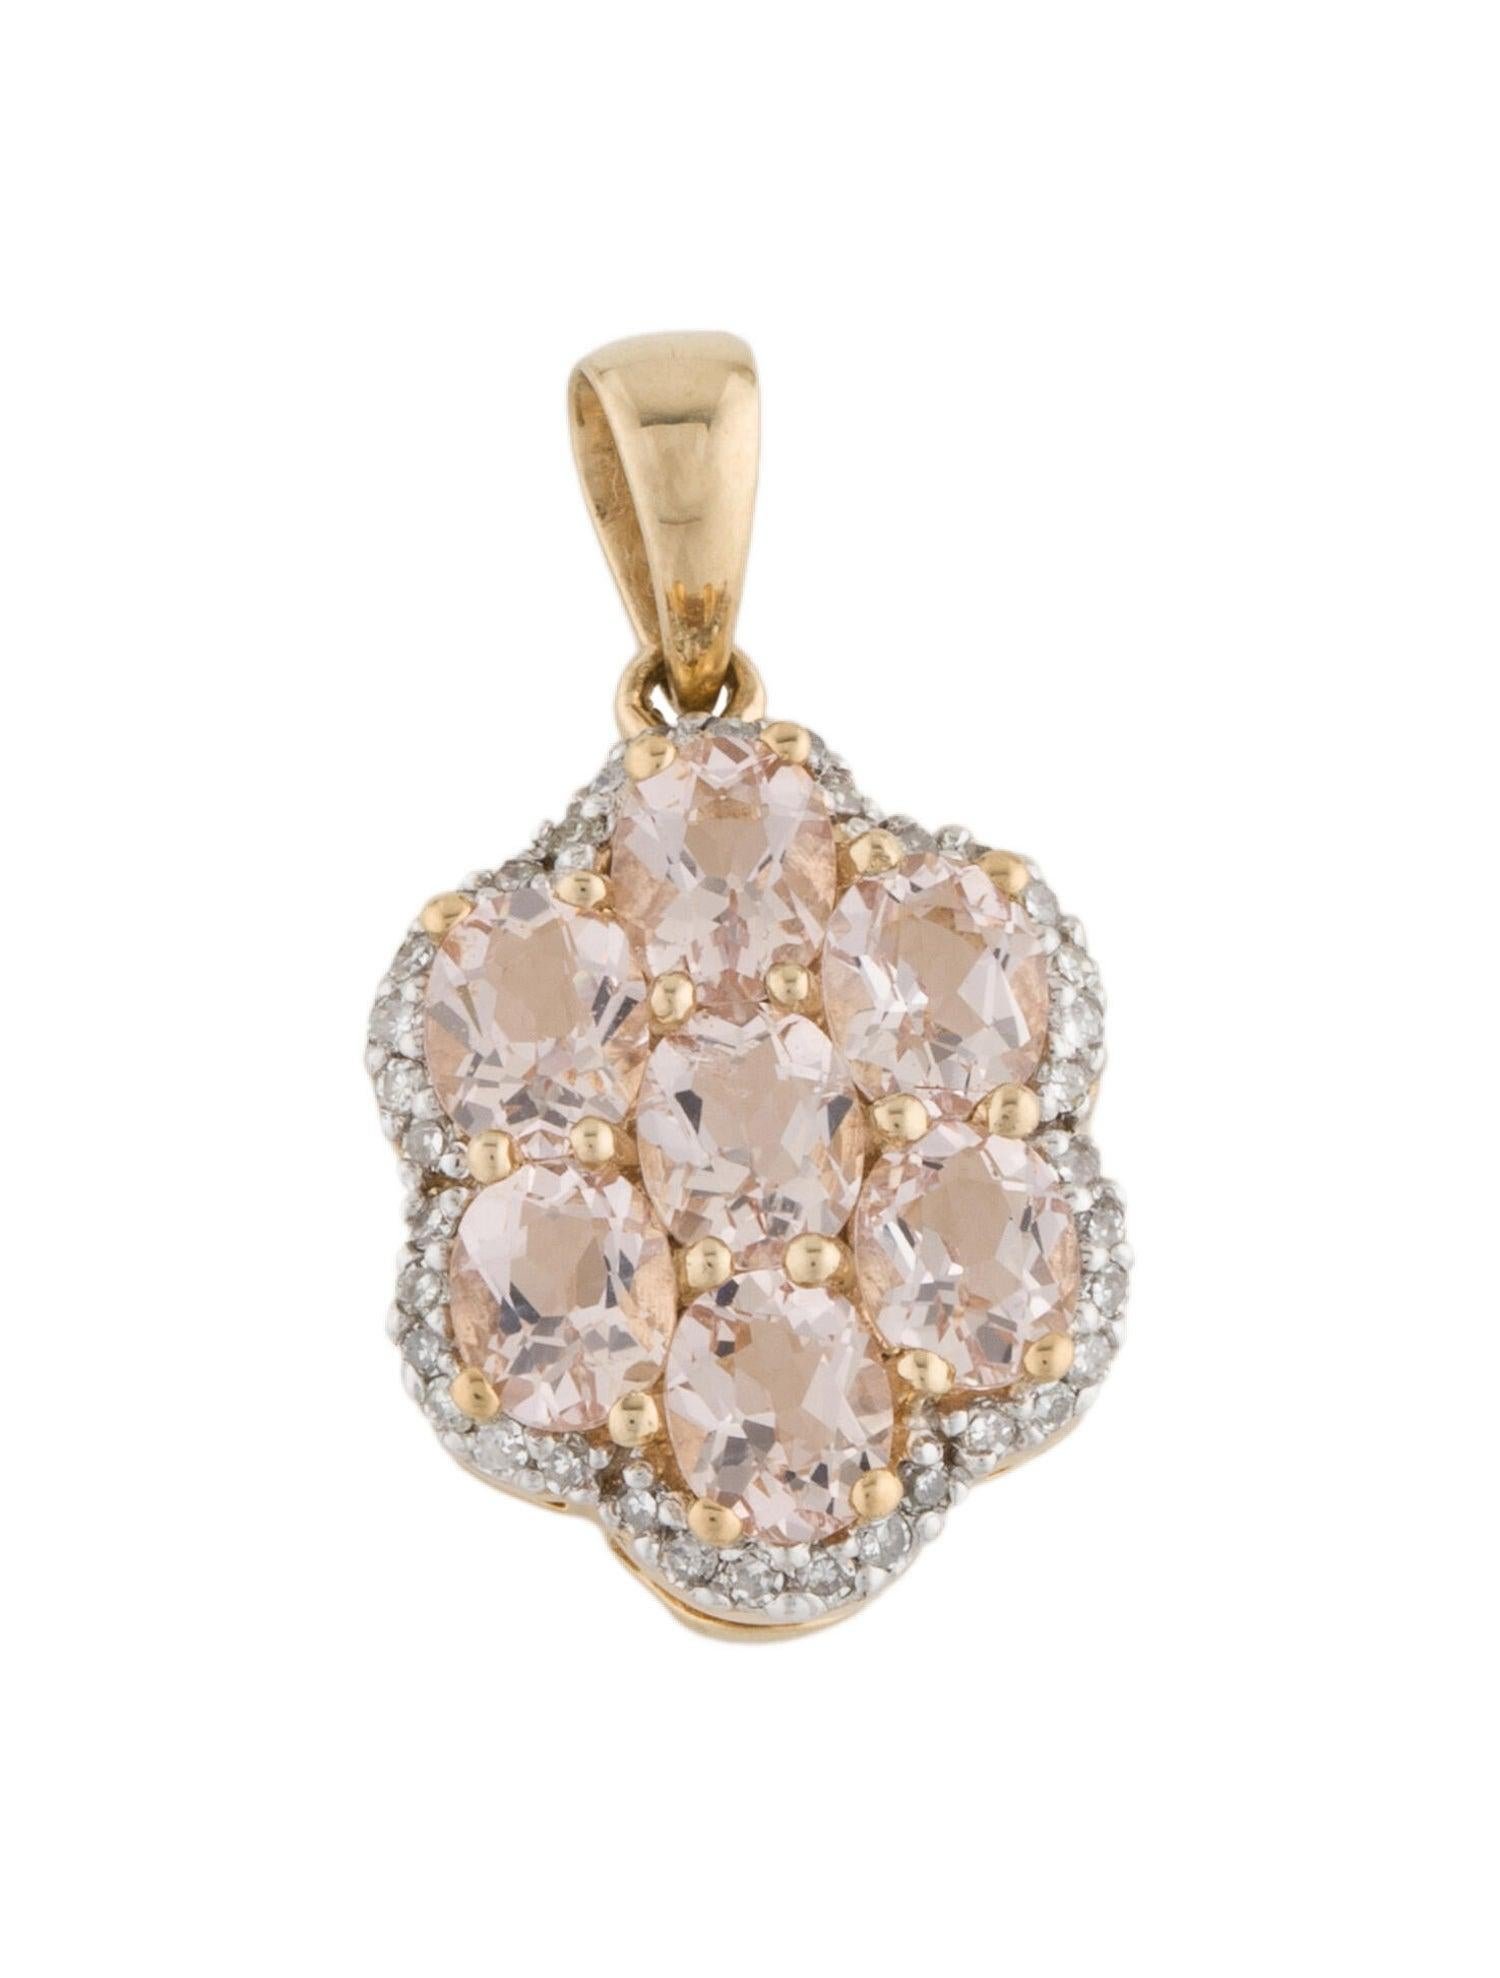 Exquisite 14K Diamond & Morganite Pendant - Elegant Gemstone Statement Piece In New Condition For Sale In Holtsville, NY